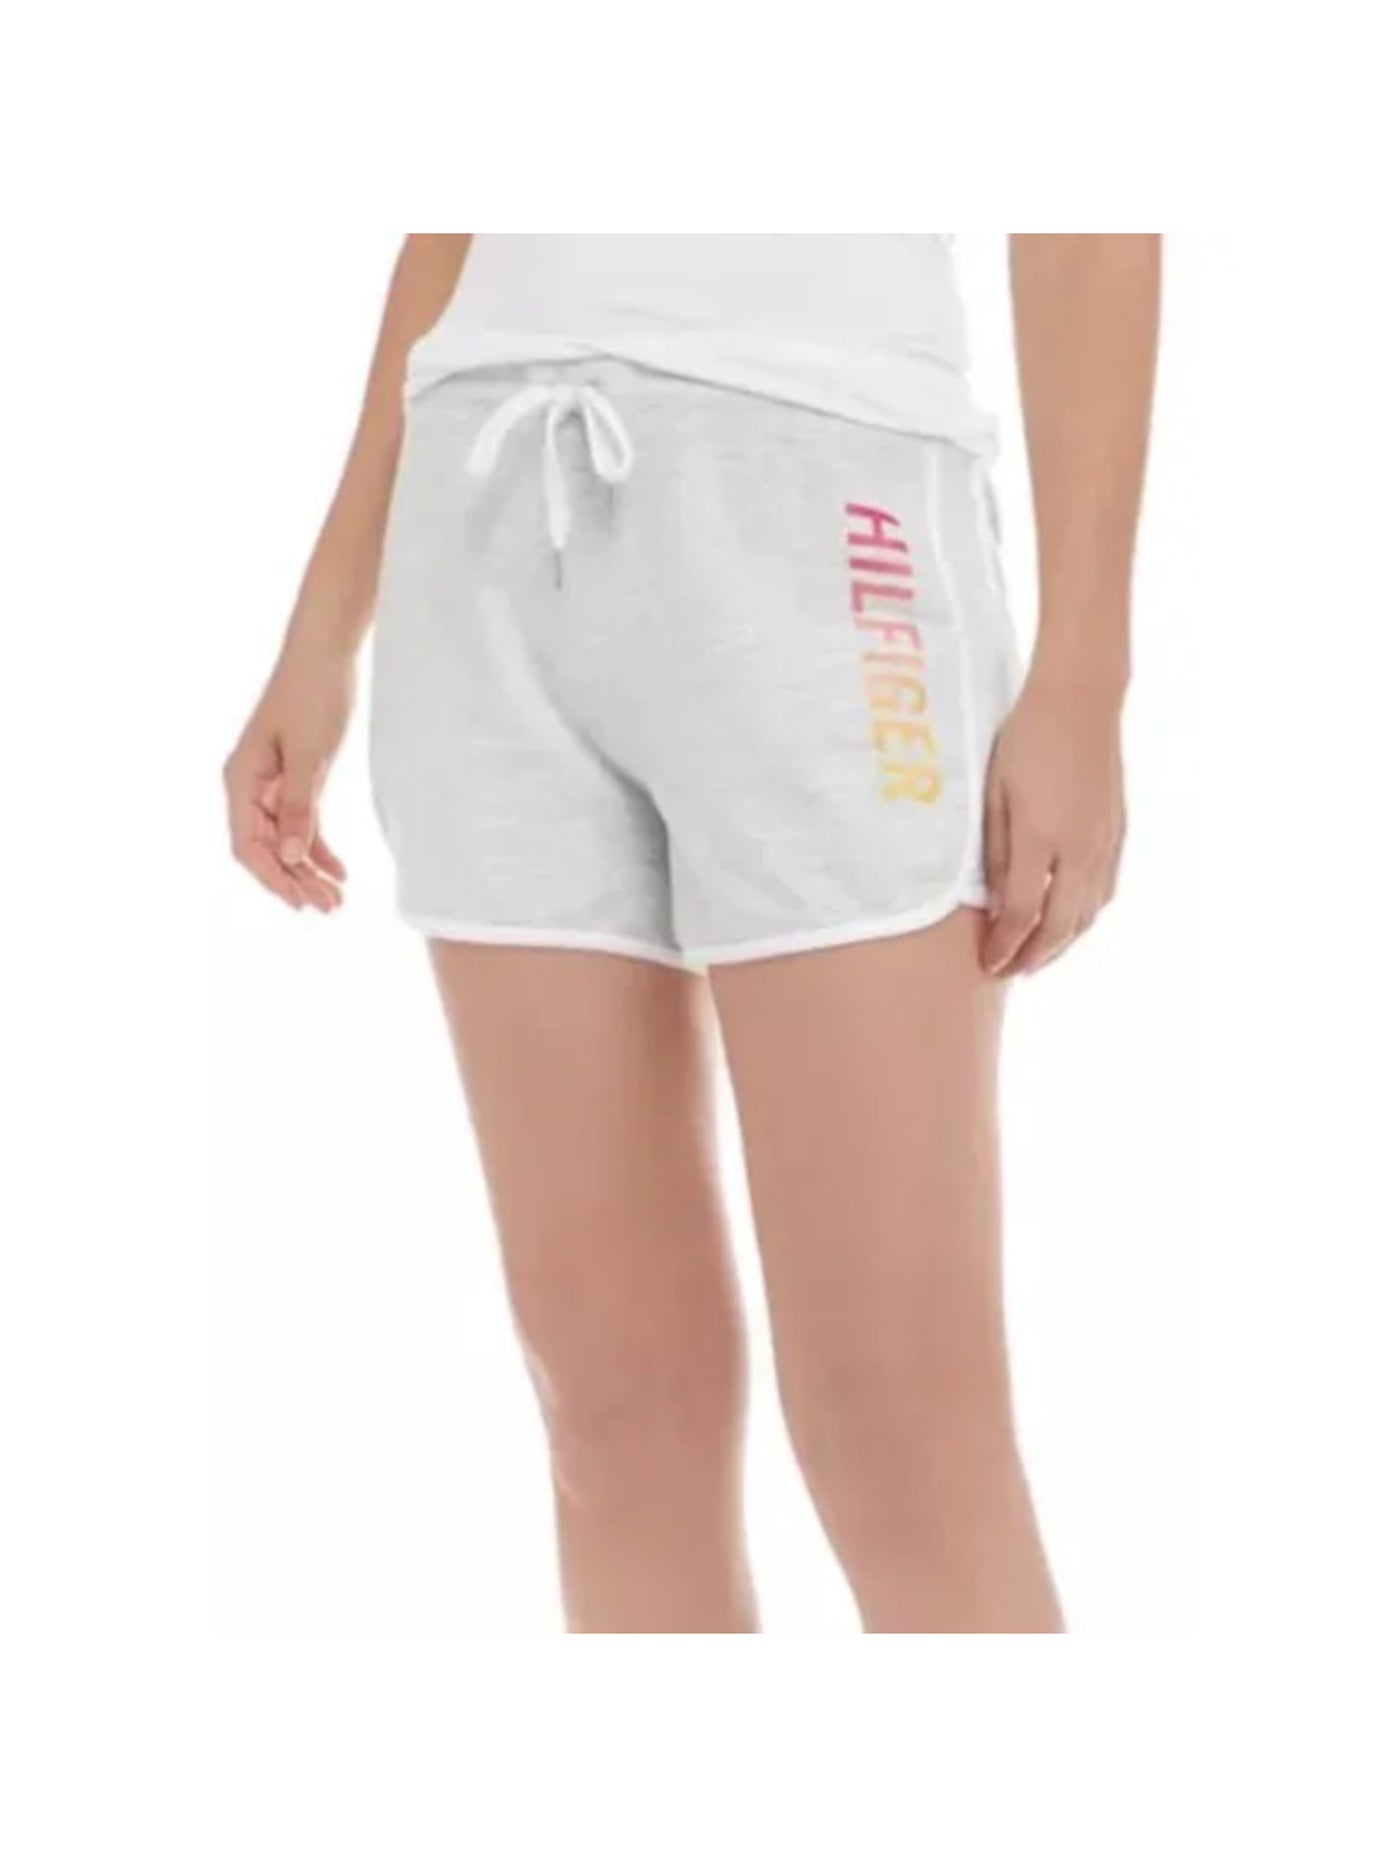 TOMMY HILFIGER SPORT Womens Gray Cotton Blend Heather Shorts XL